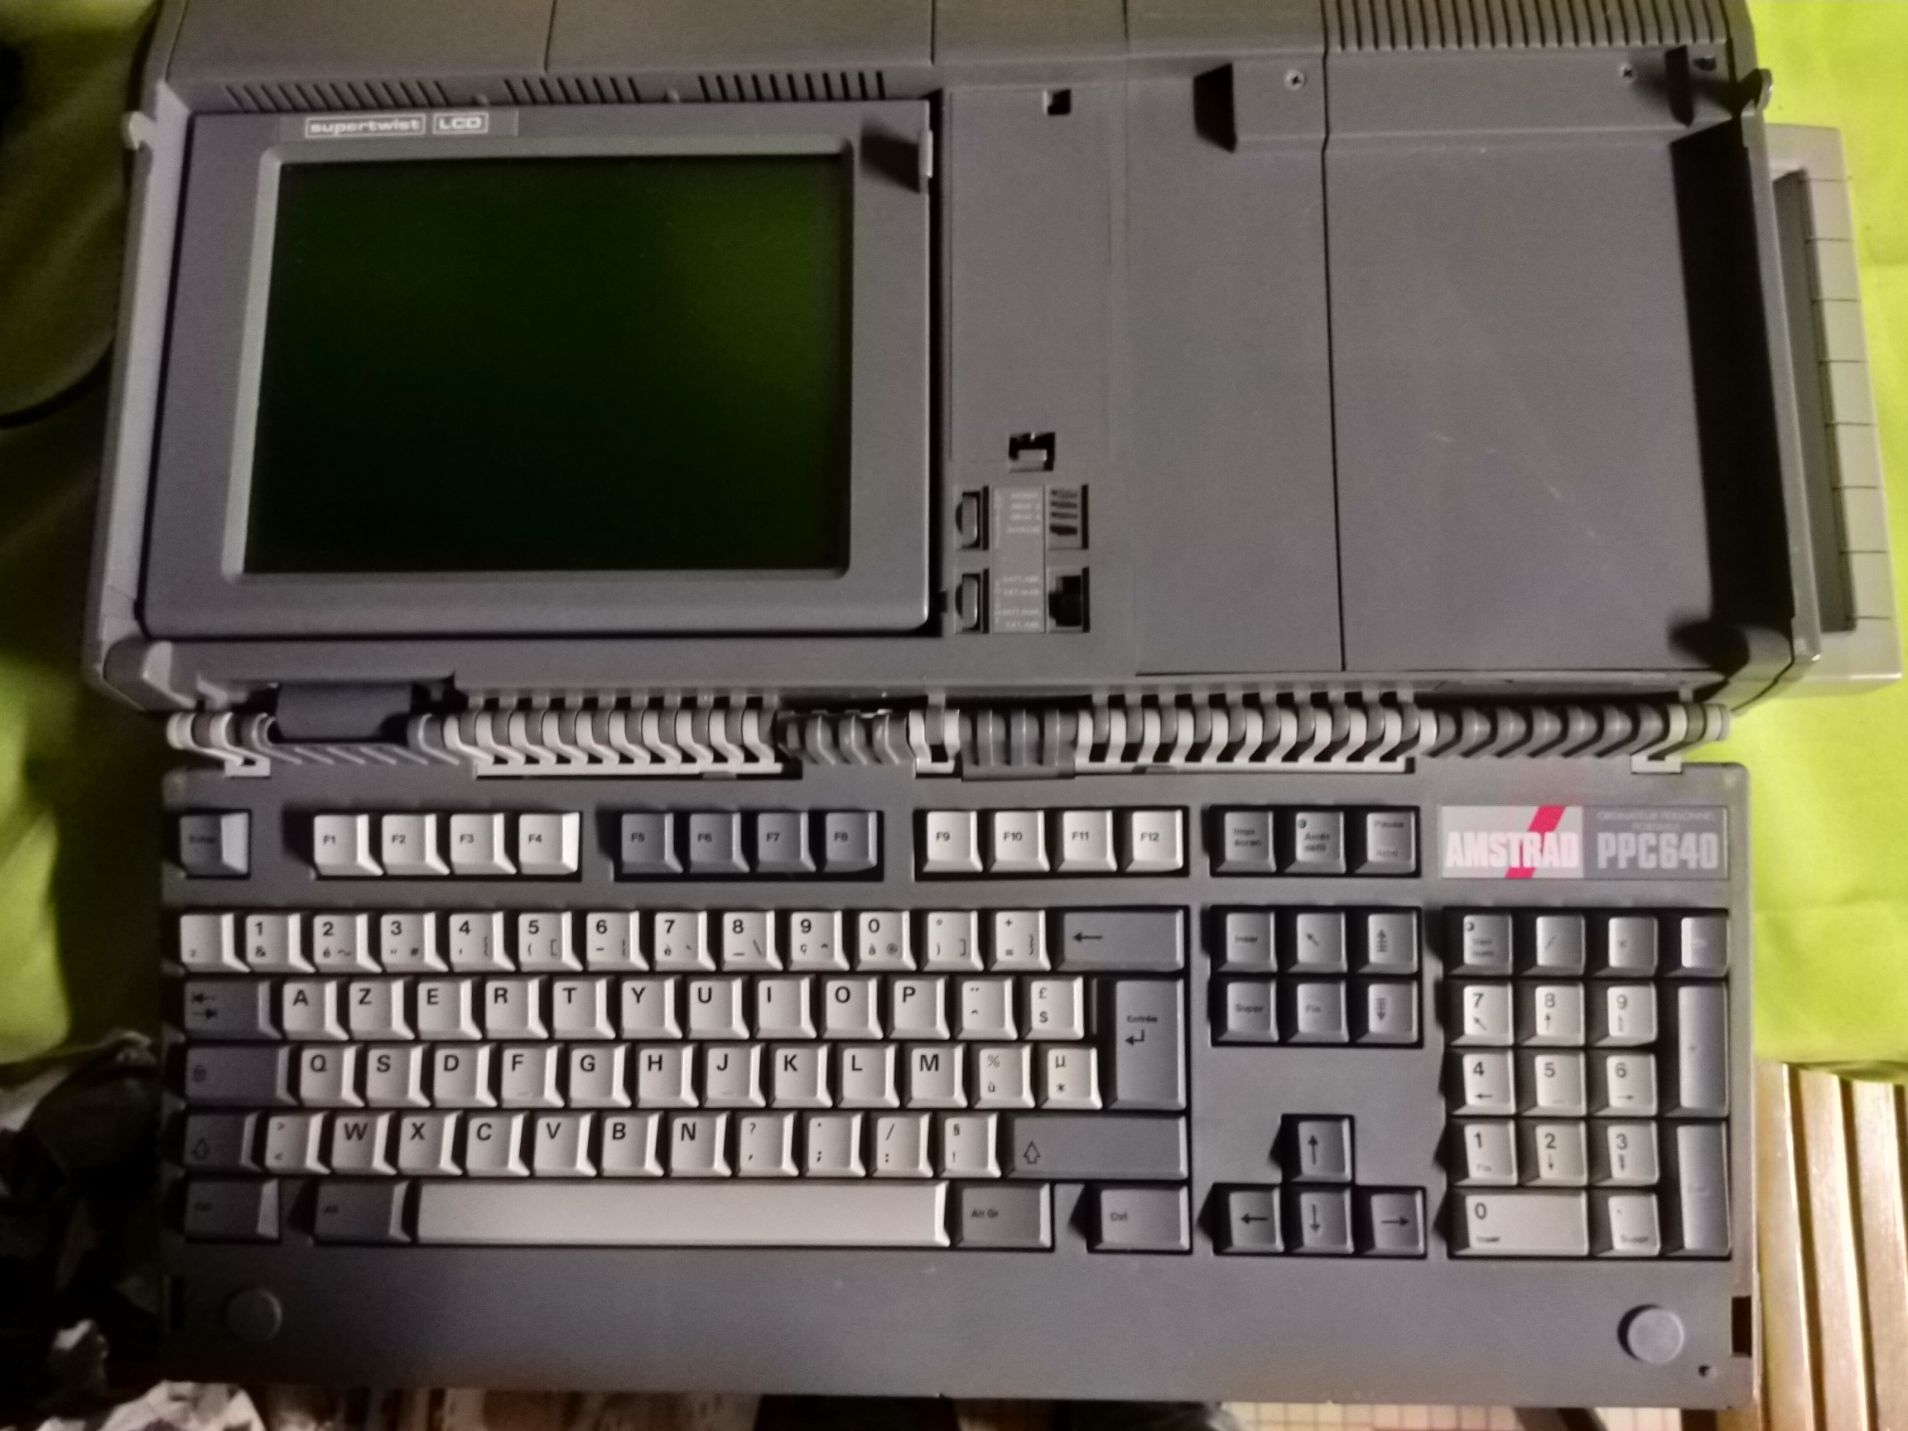 Amstrad PPC 640 ouvert, vu du haut